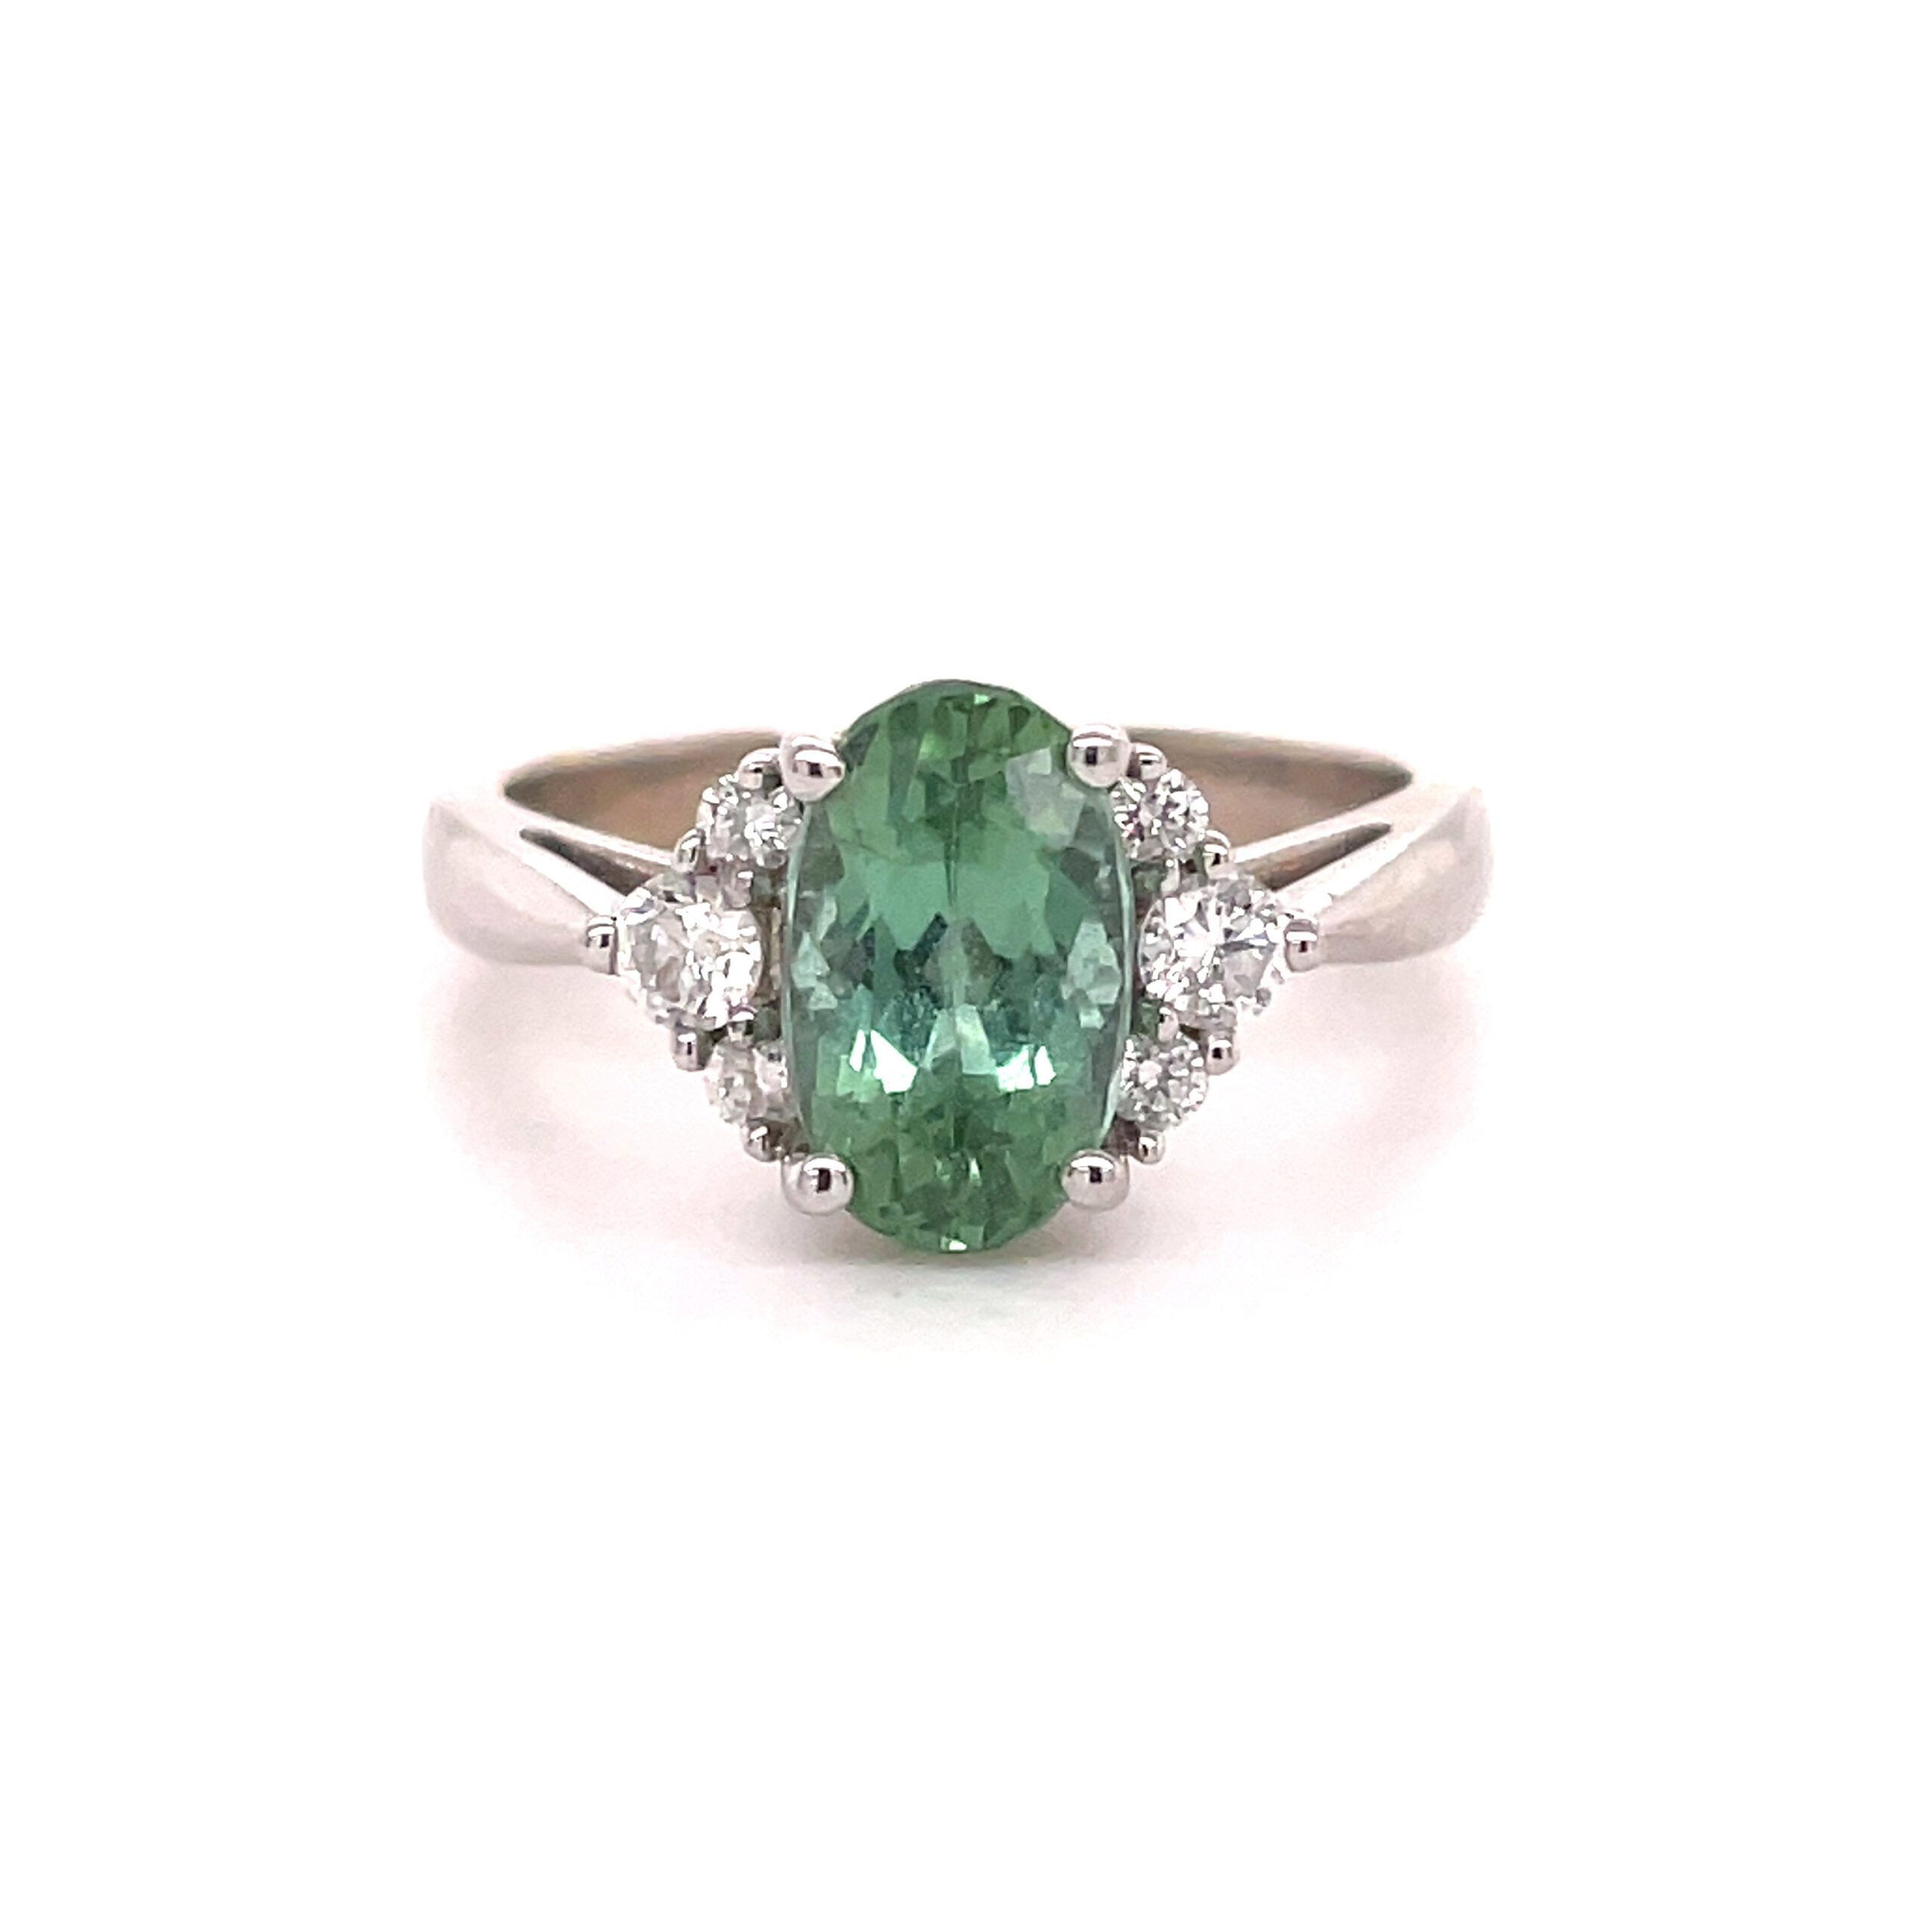 Regard Jewelry - Green Tourmaline and Diamond Ring at Regard